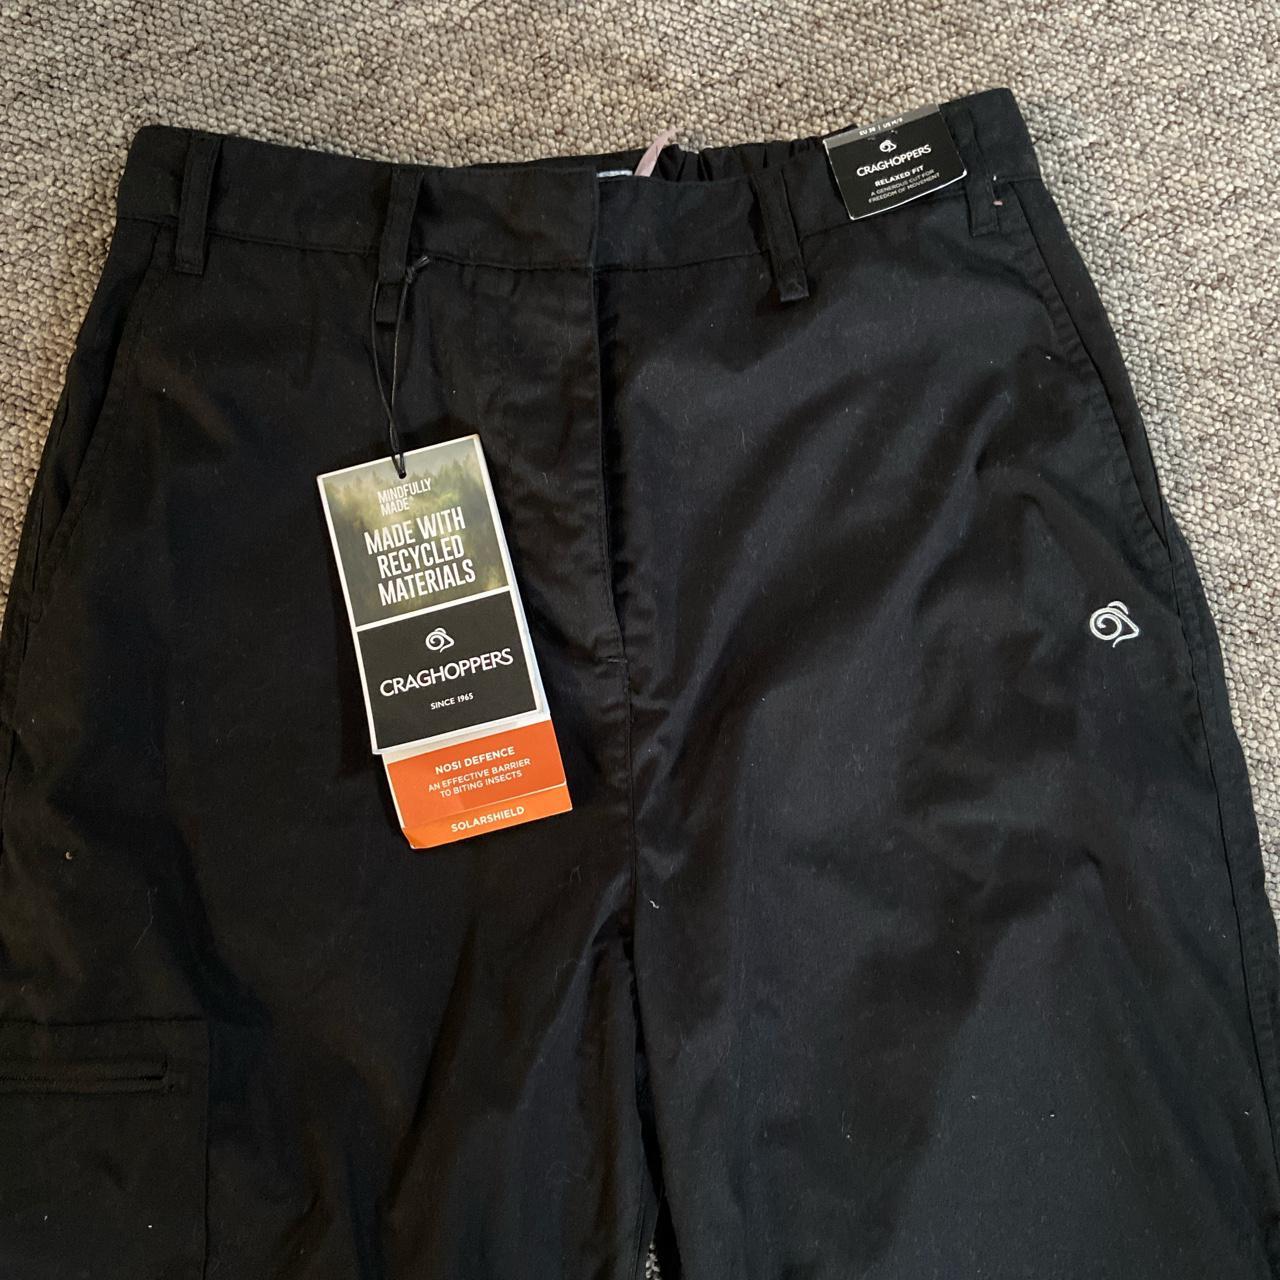 Product Image 1 - womens kiwi 2 trousers Black

Size